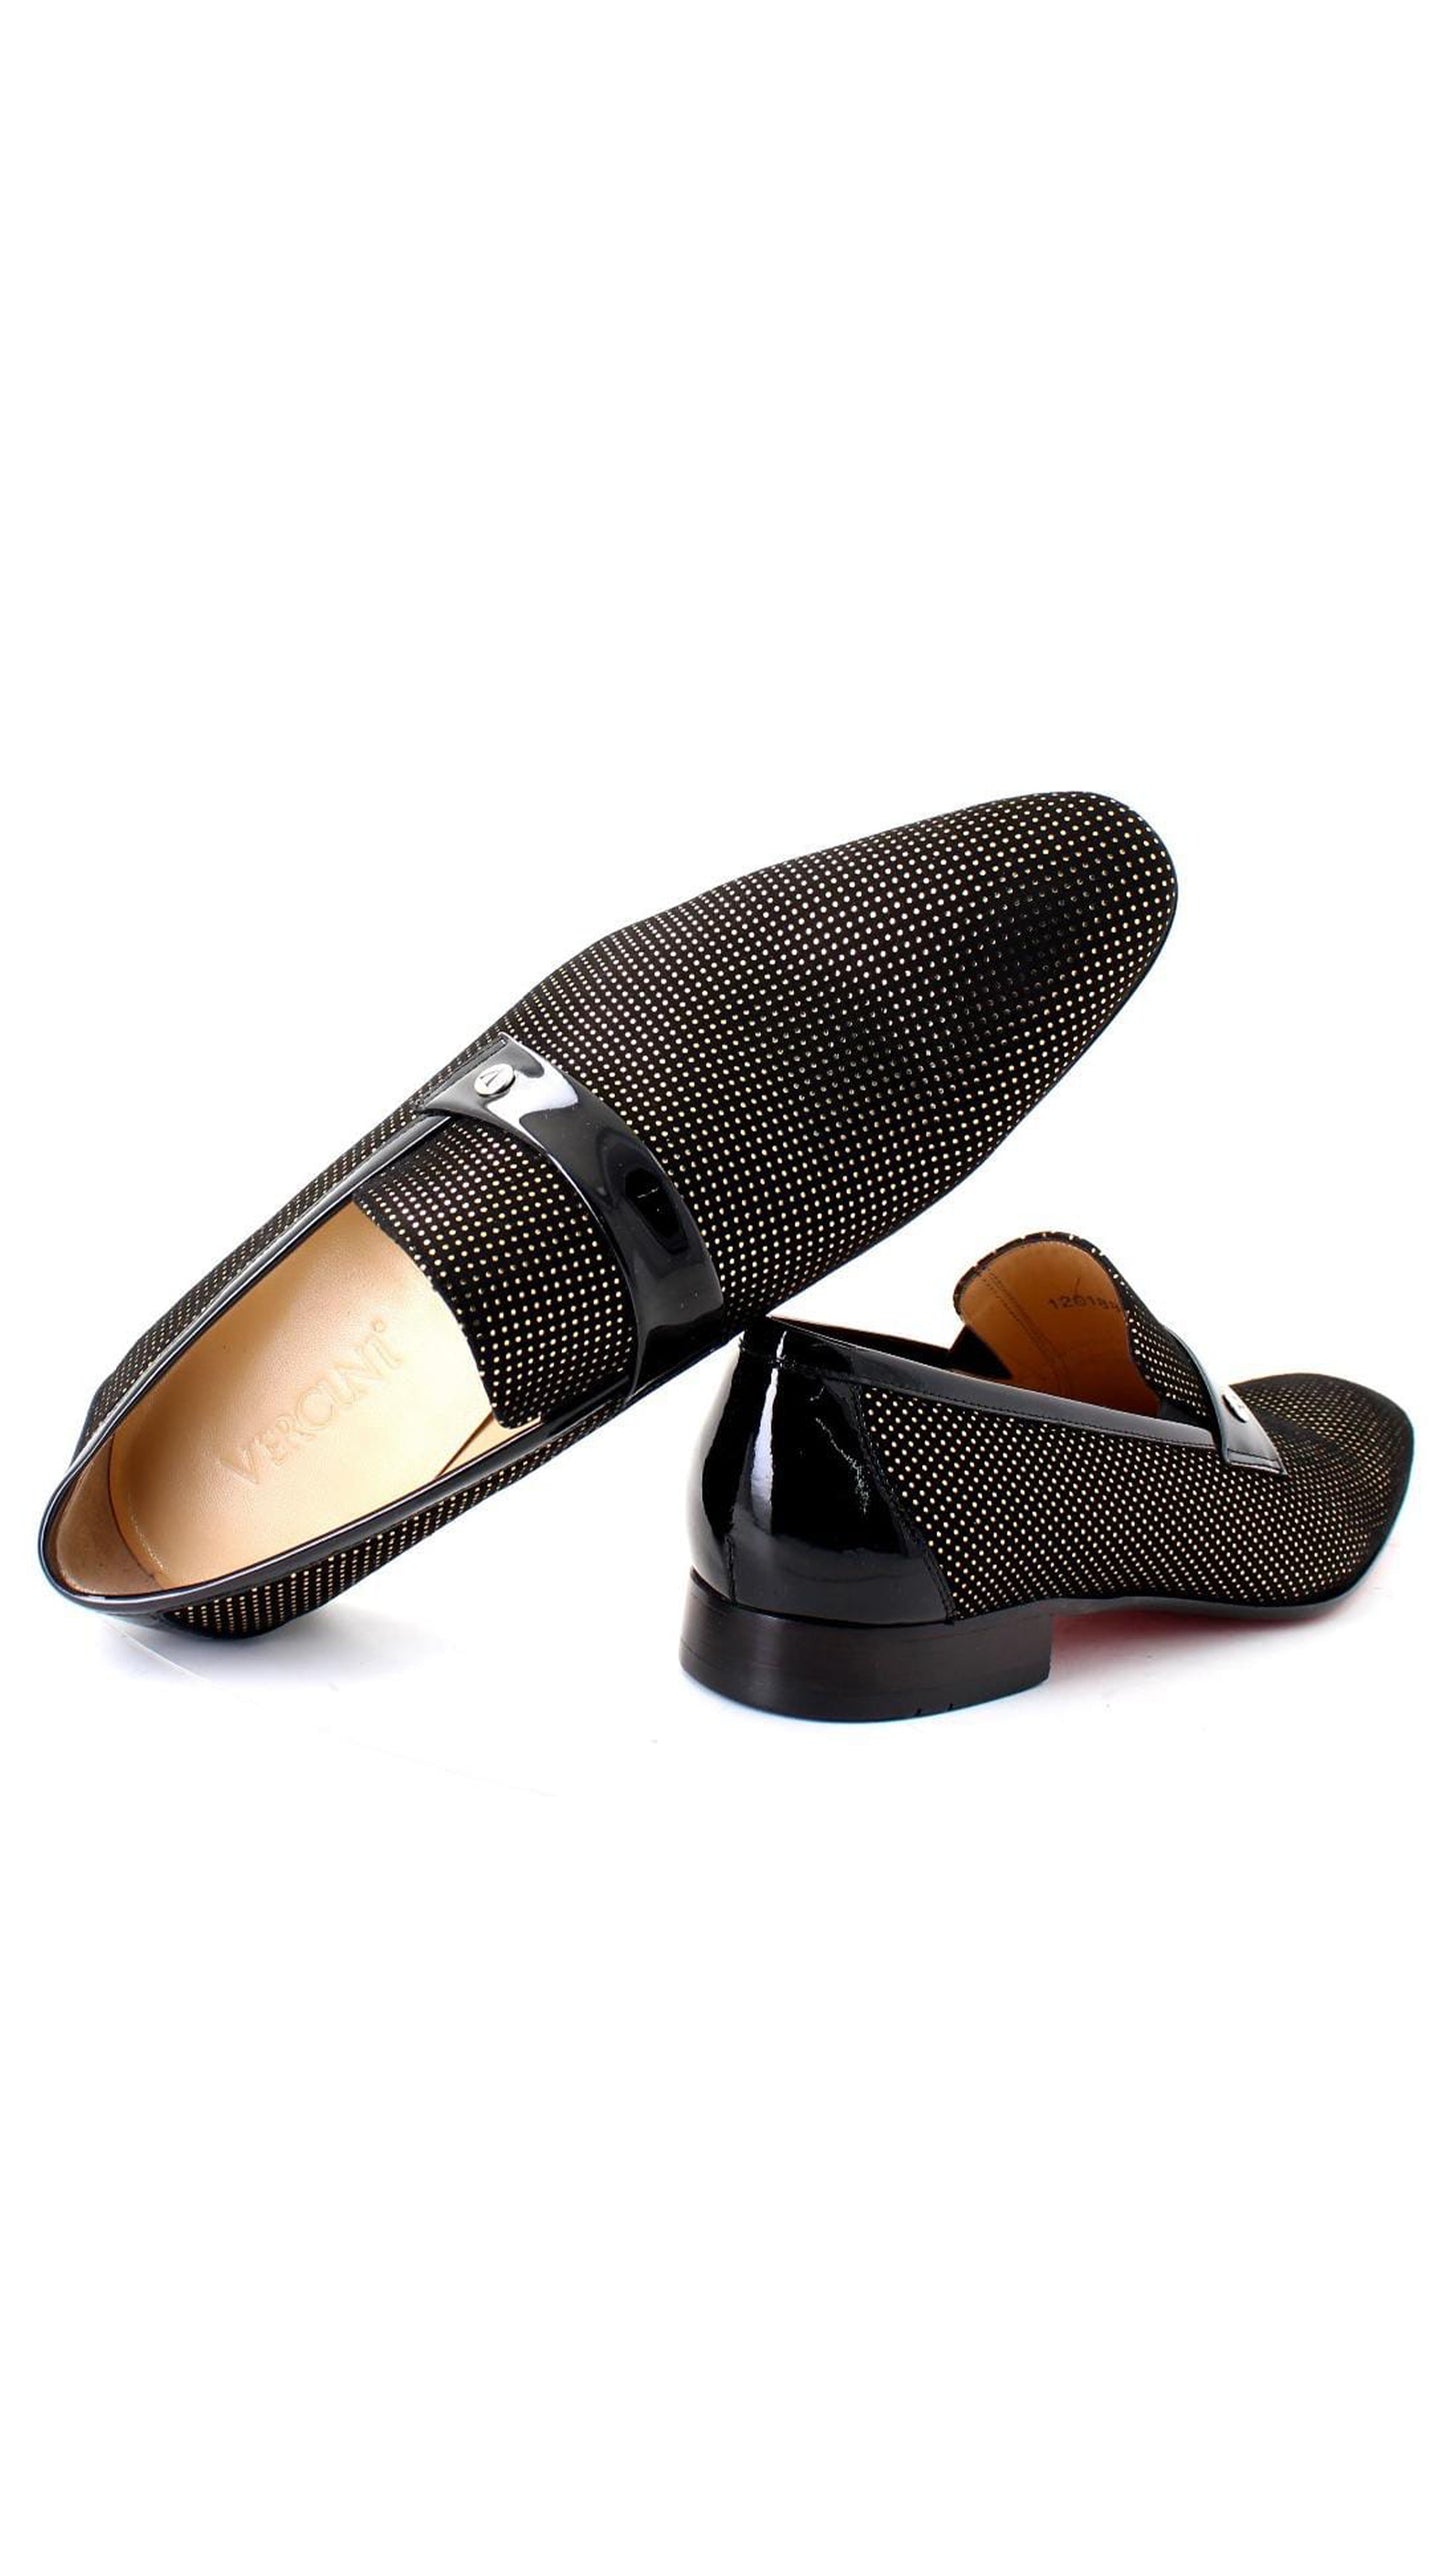 Vercini Exquisite Tuxedo Loafers SHOES Shoe Collection Vercini